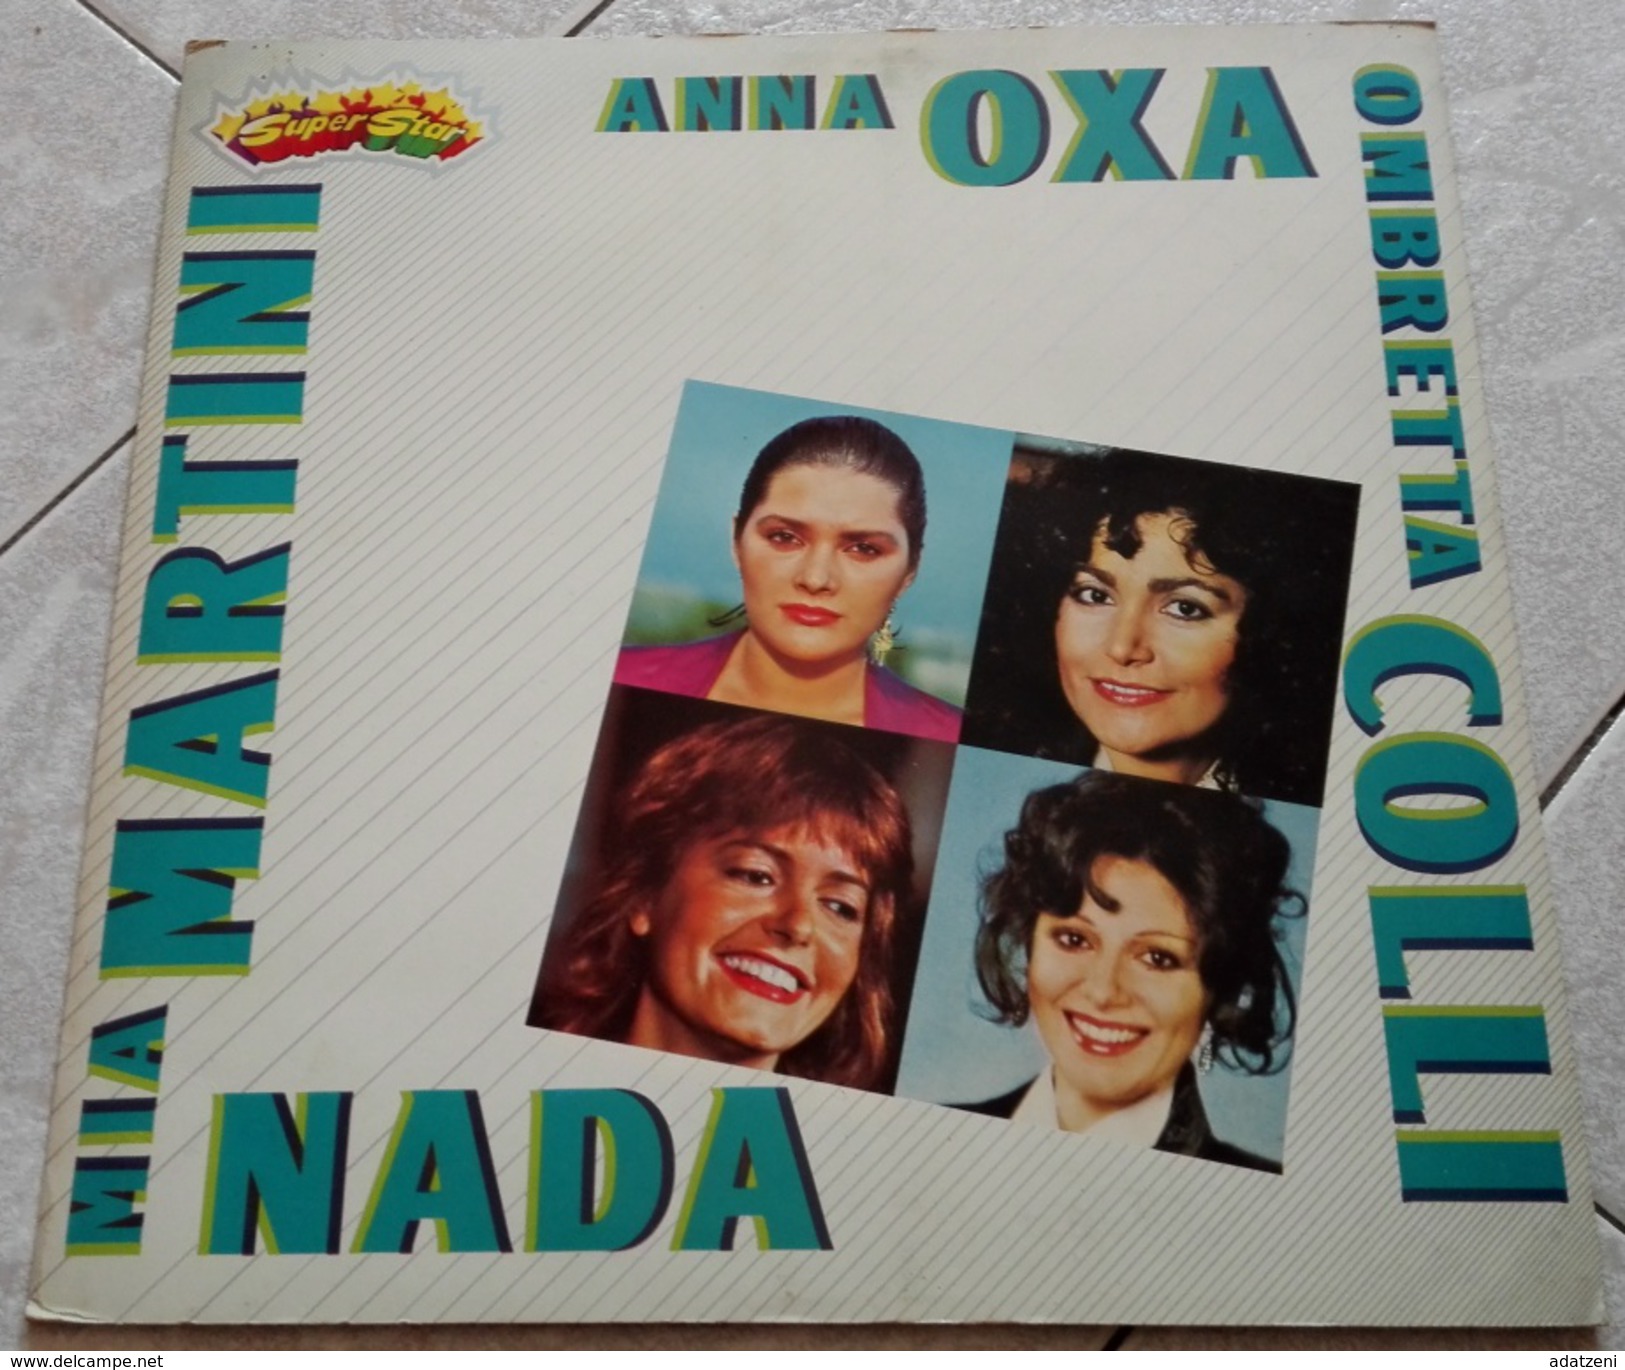 OXA COLLI MARTINI NADA RACCOLTA SUPERSTAR Disco LP 33 Giri - Other - Italian Music